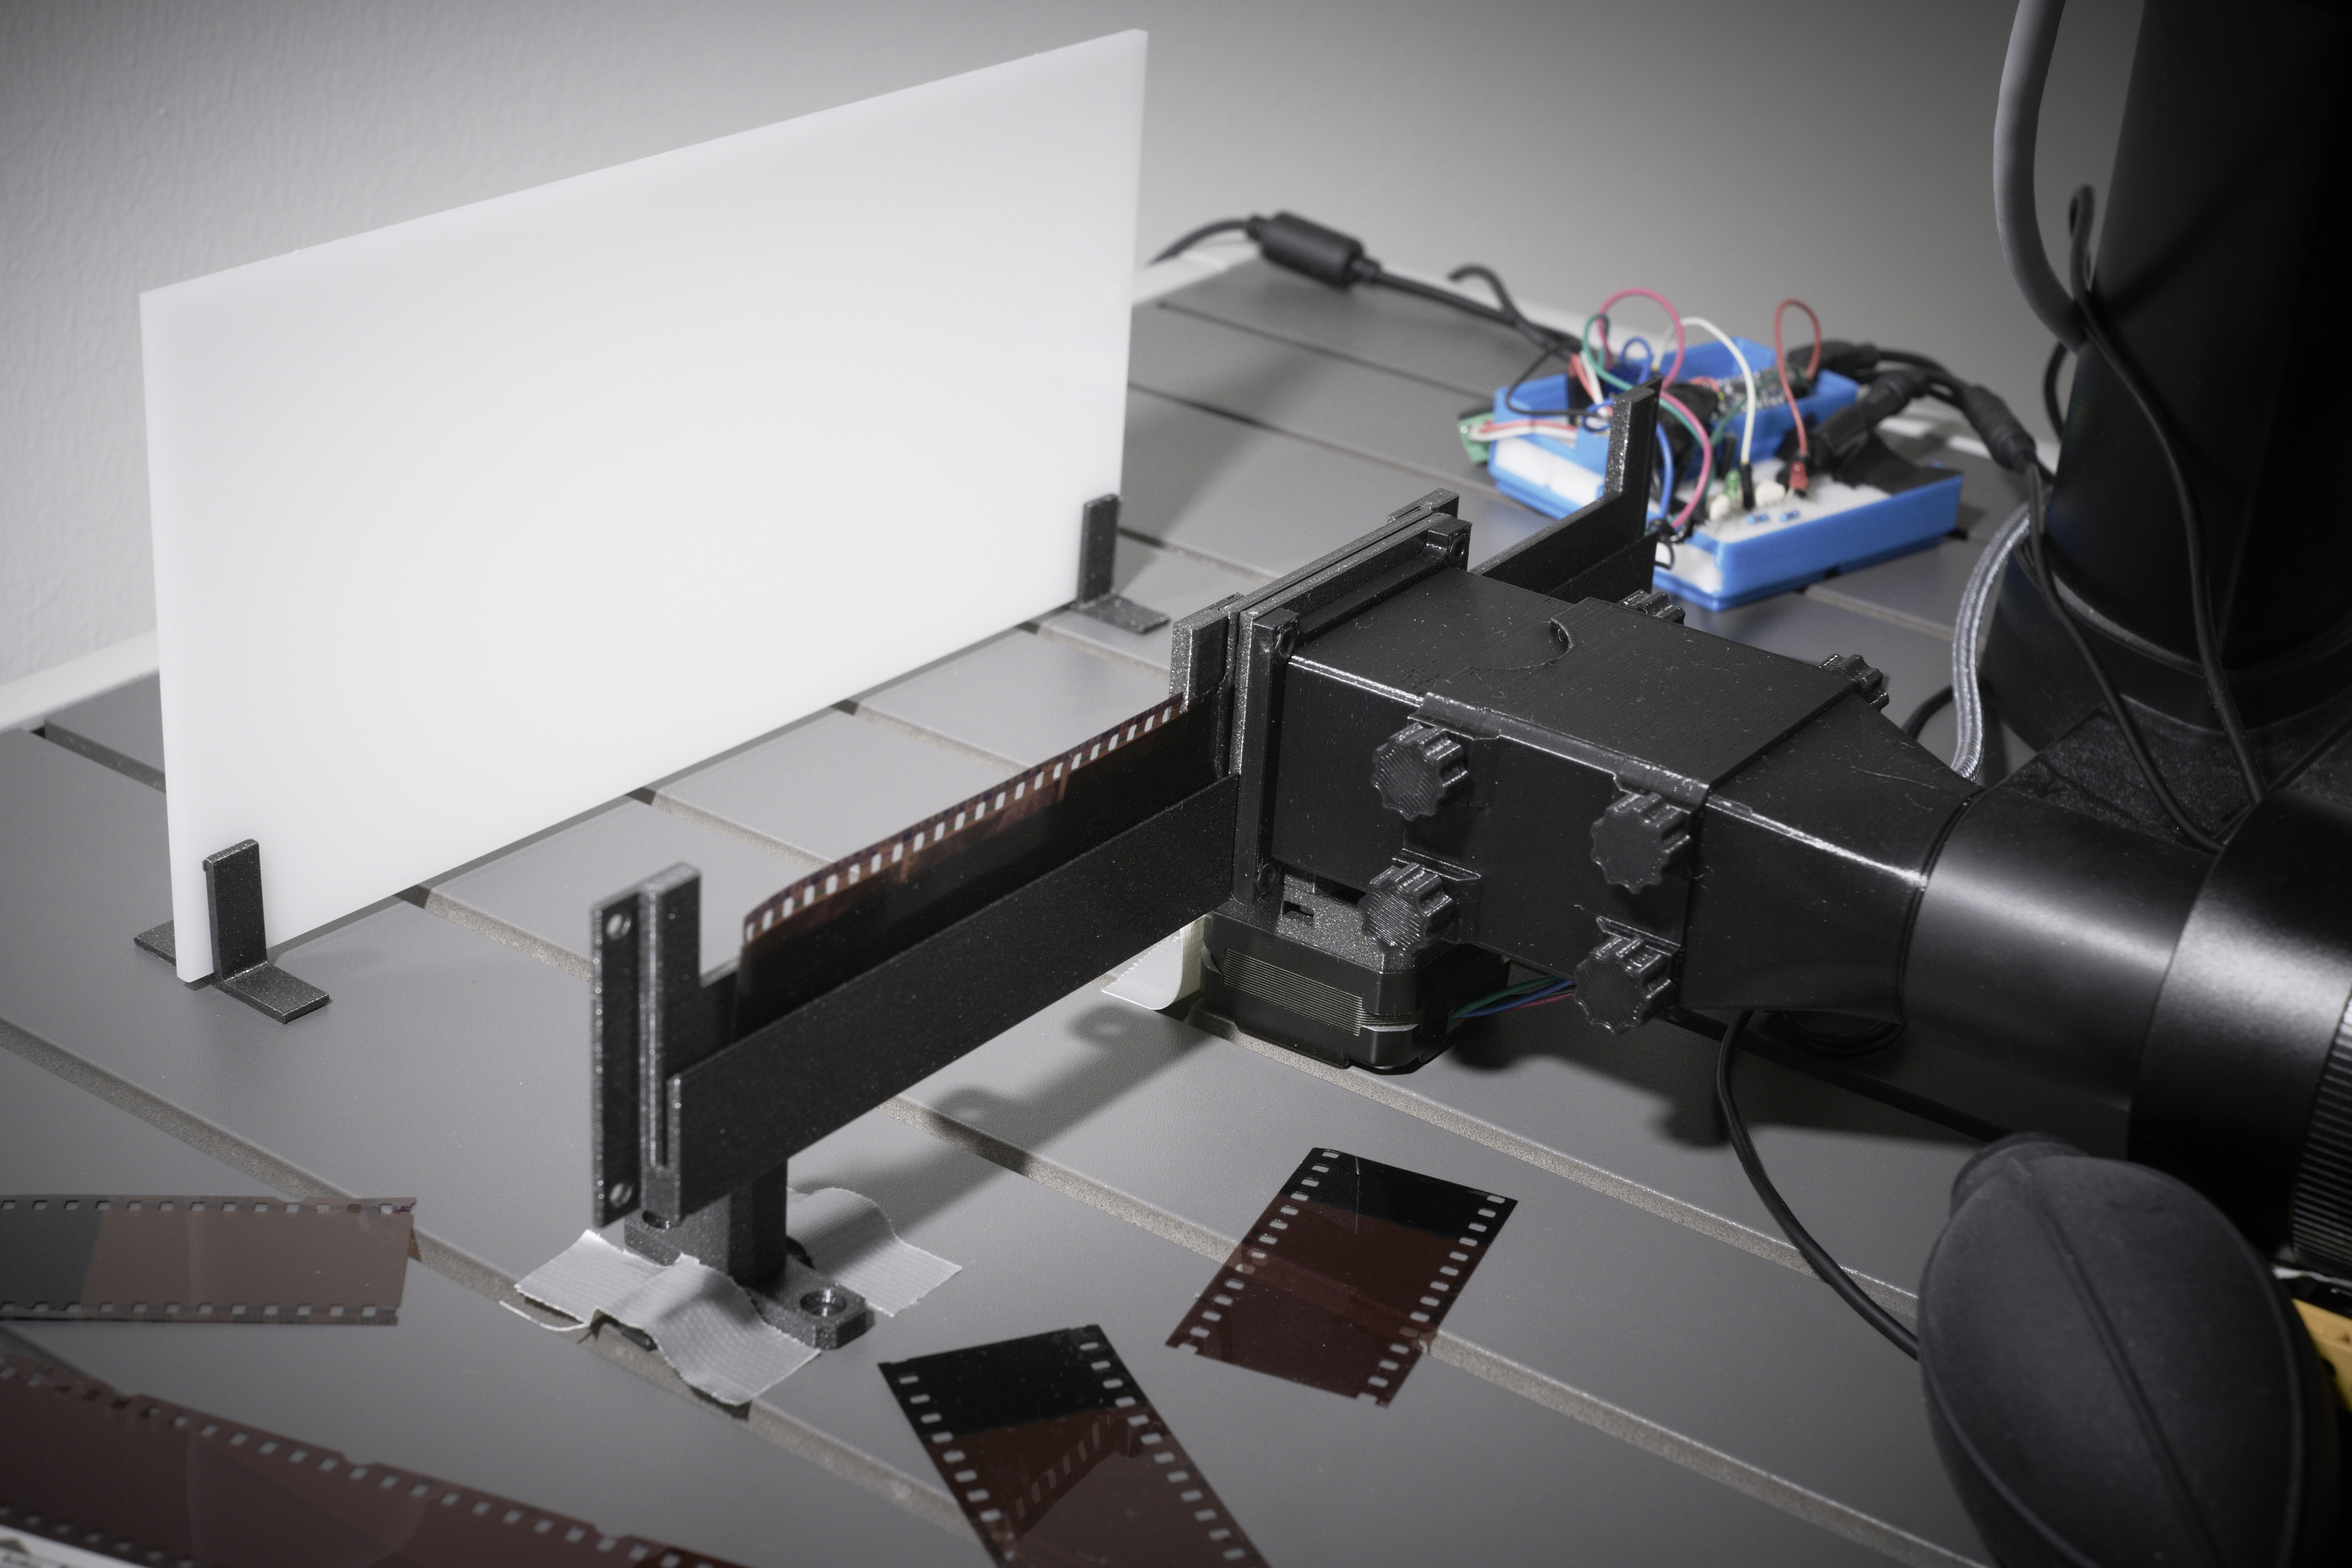 Modular print in place 35mm film scanner